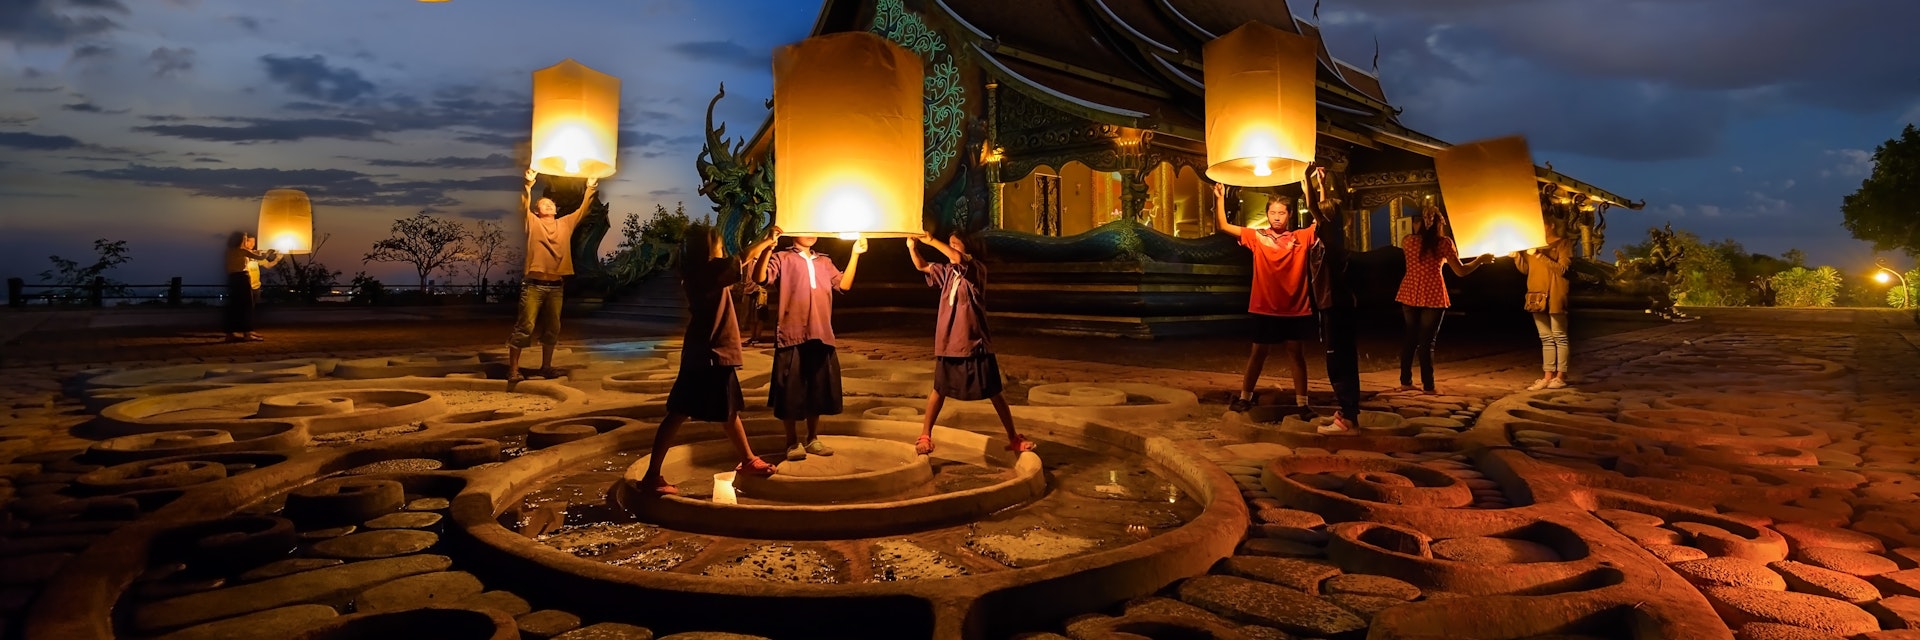 People floating lamp in yeepeng festival at pagoda tree glow temple Wat Sirindhorn Wararam.